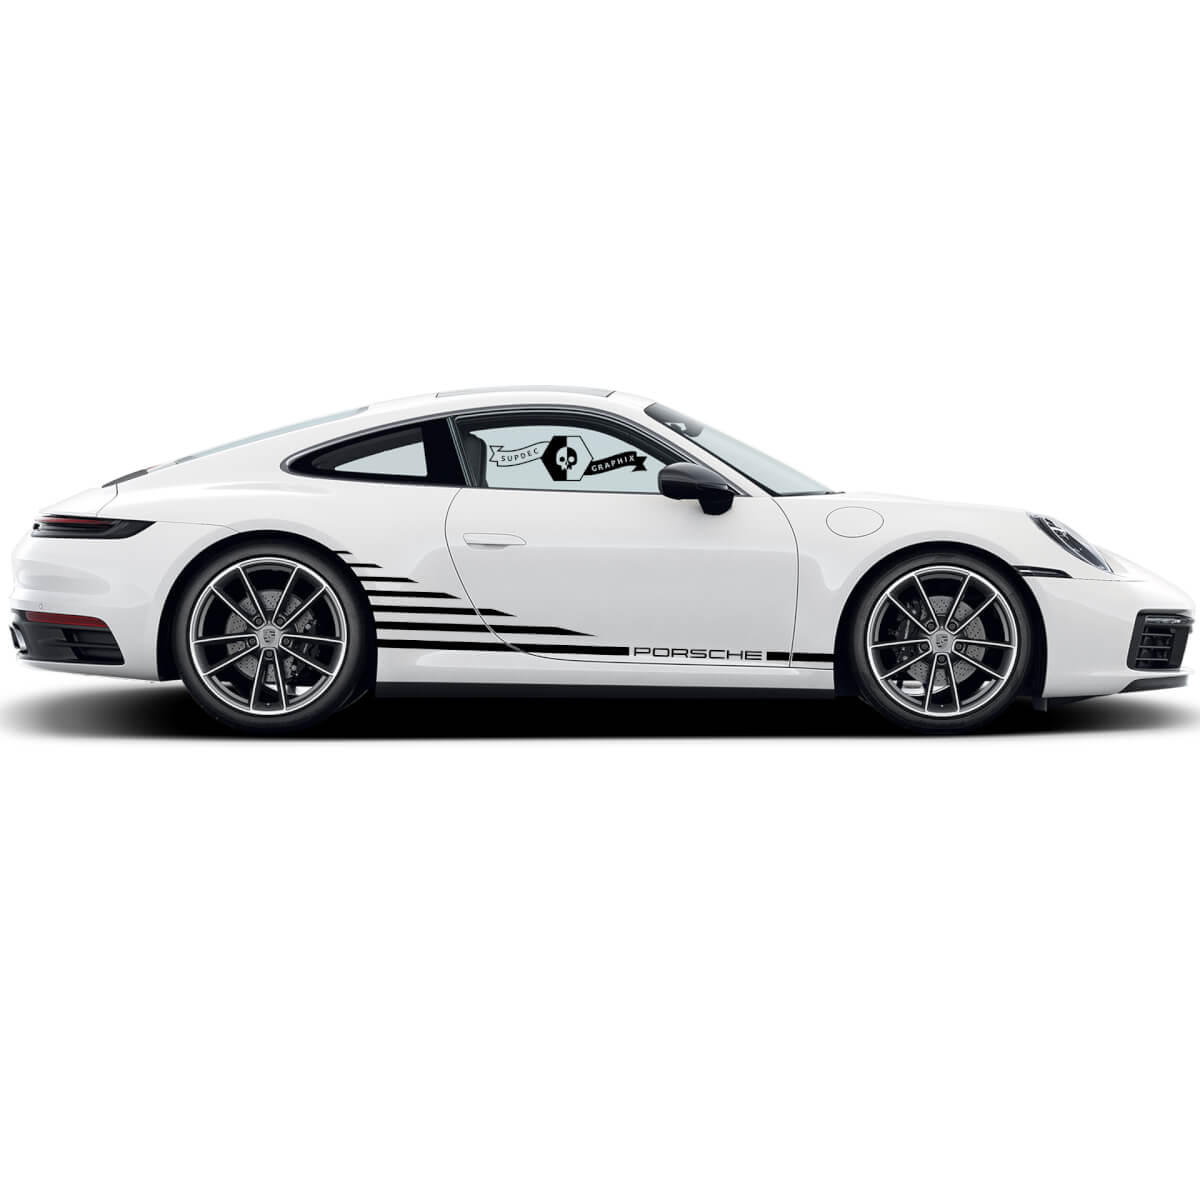 Porsche Aufkleber Streifen Porsche 911 Türen Wrap Carrera Seitenaufkleber Aufkleber